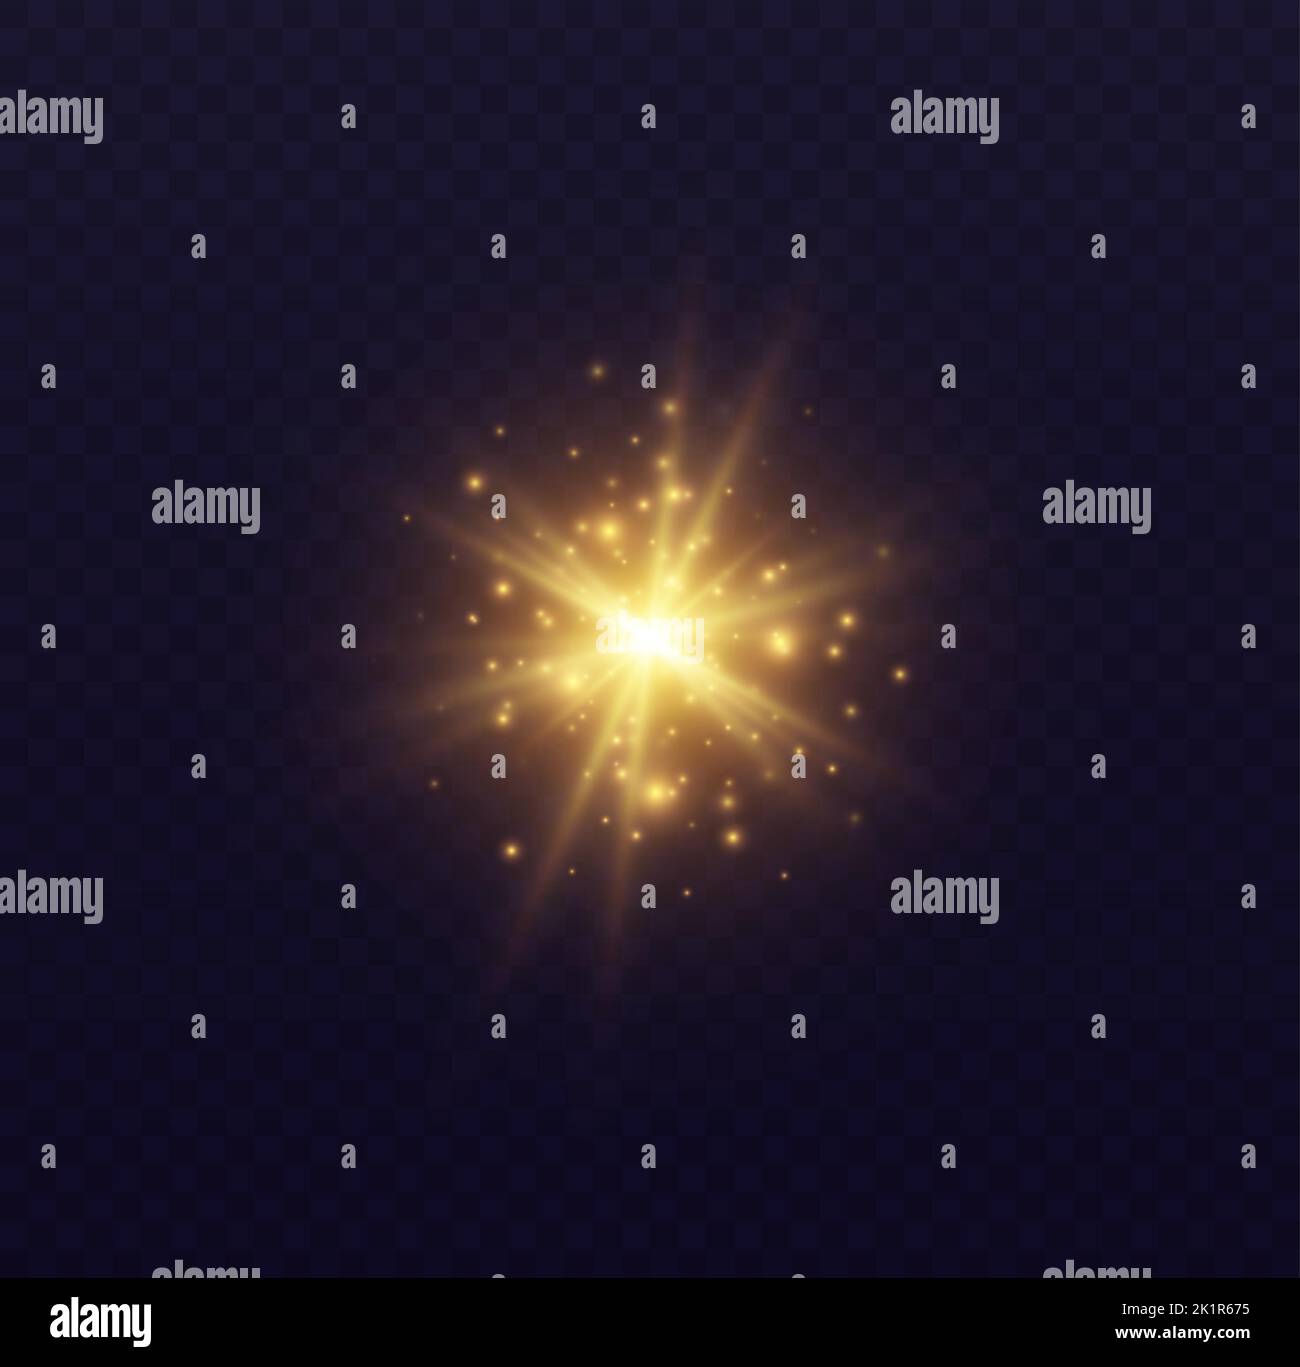 Sparkling Fairy Dust Stars Background, Stock Video